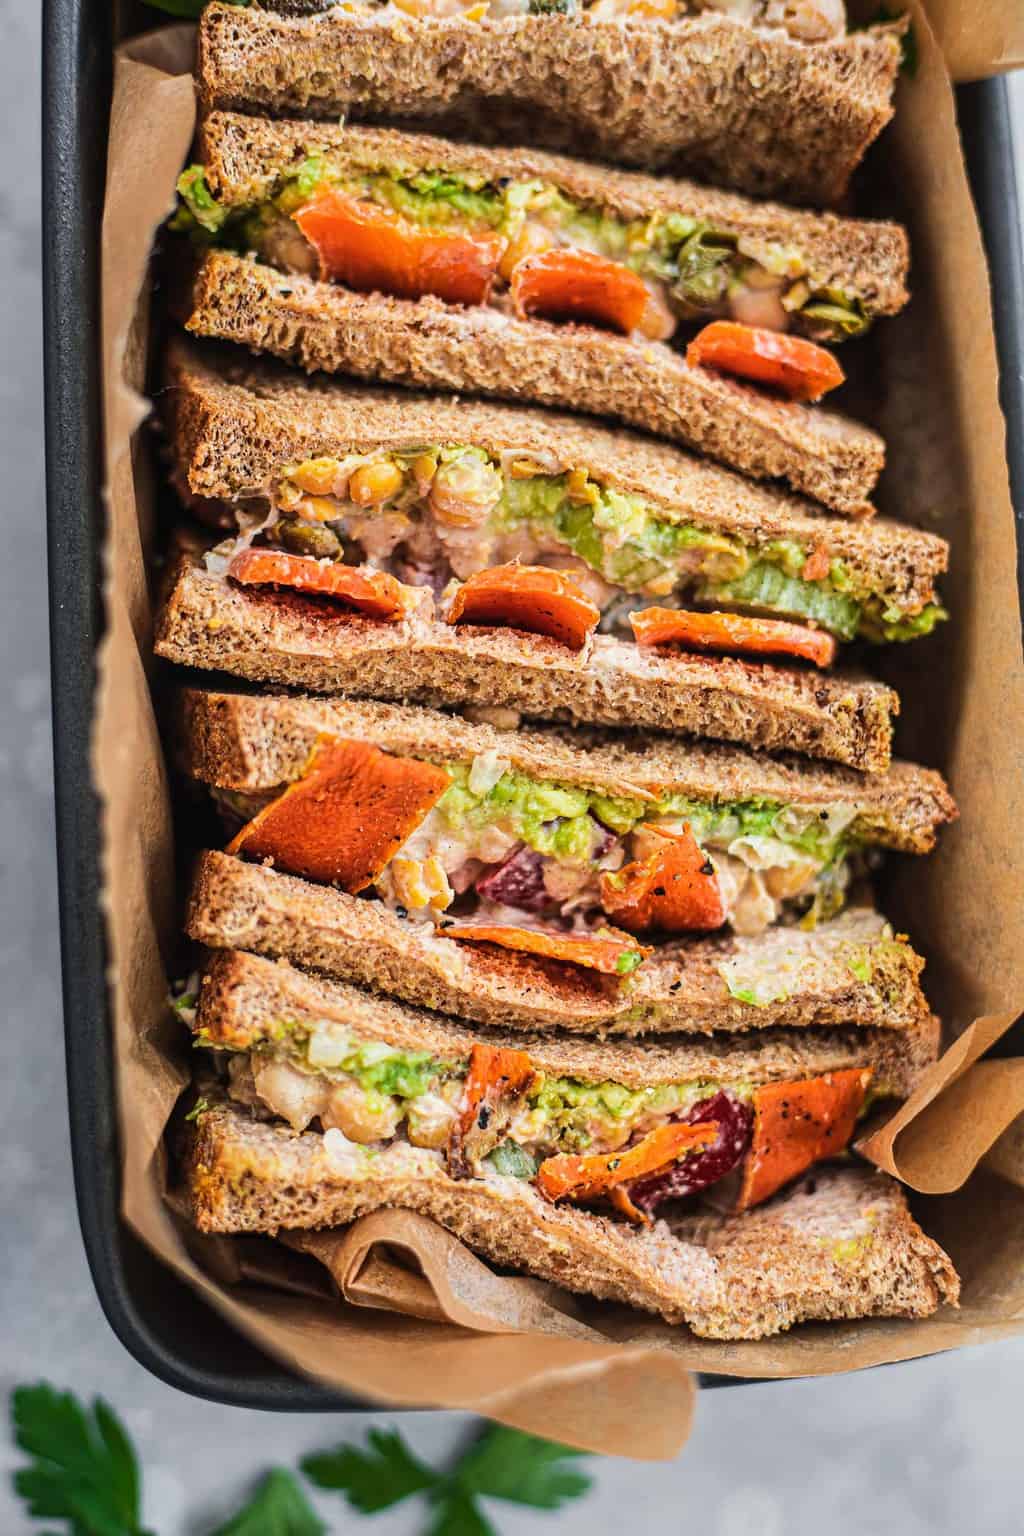 Closeup of a vegan 'tuna' sandwich with vegetables